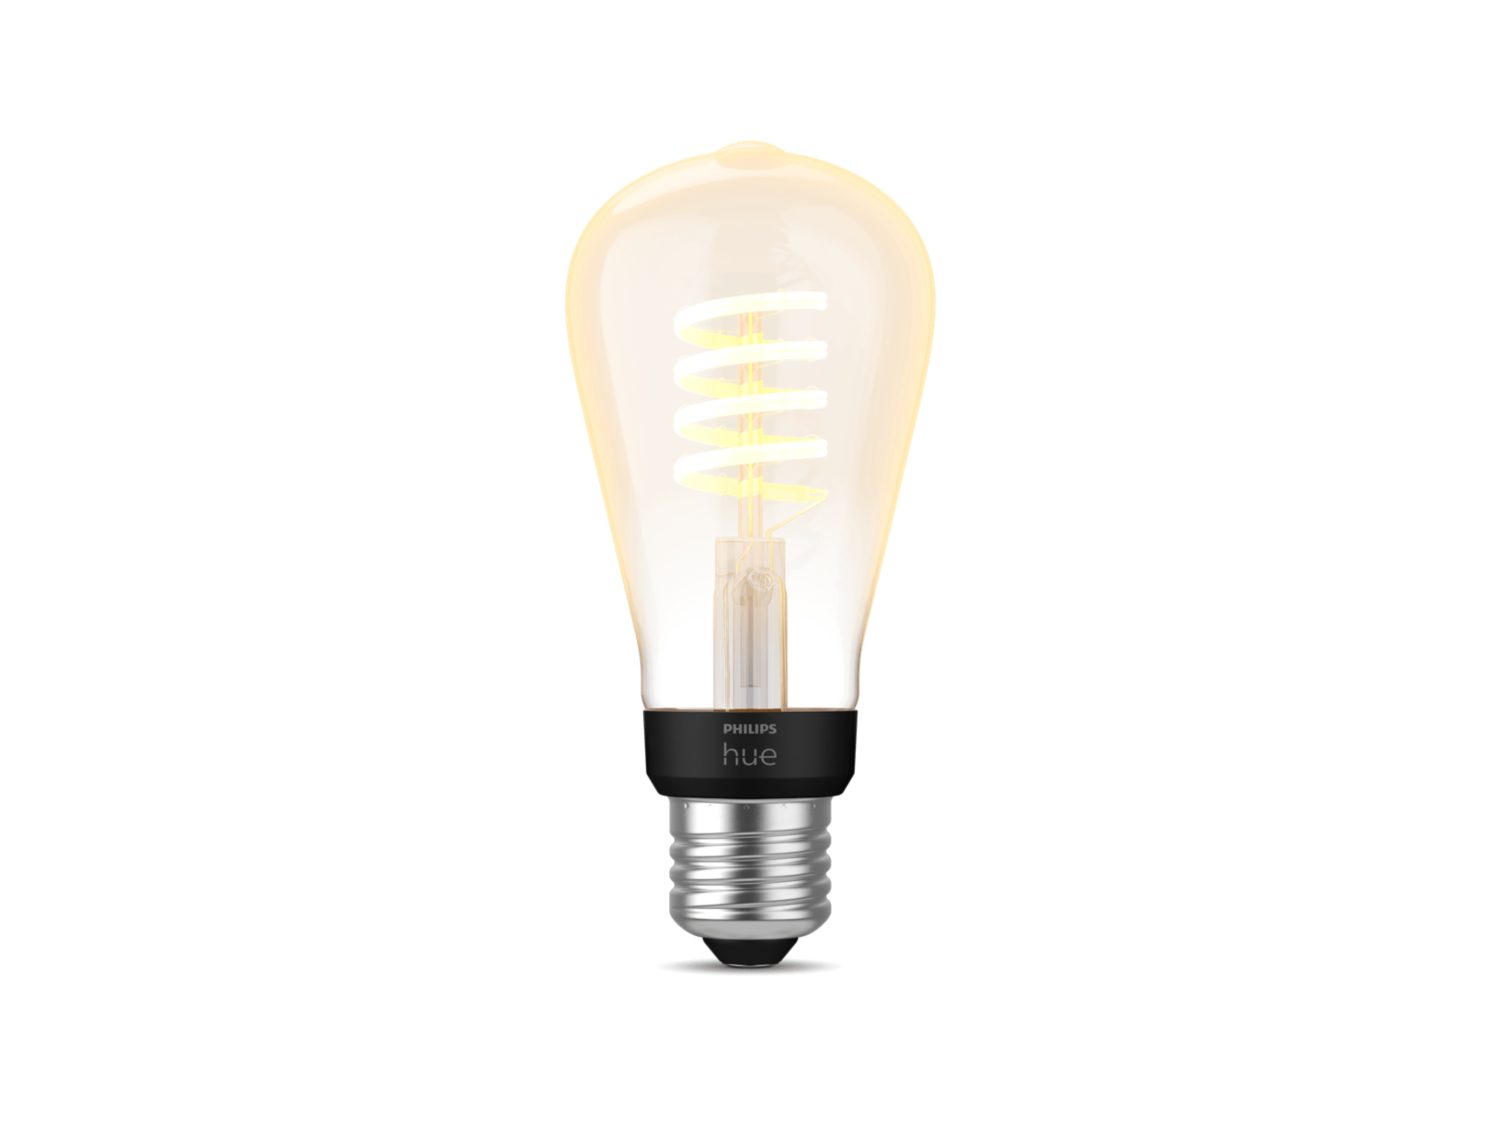 Philips Hue filament lamp Edison E27 White Ambiance